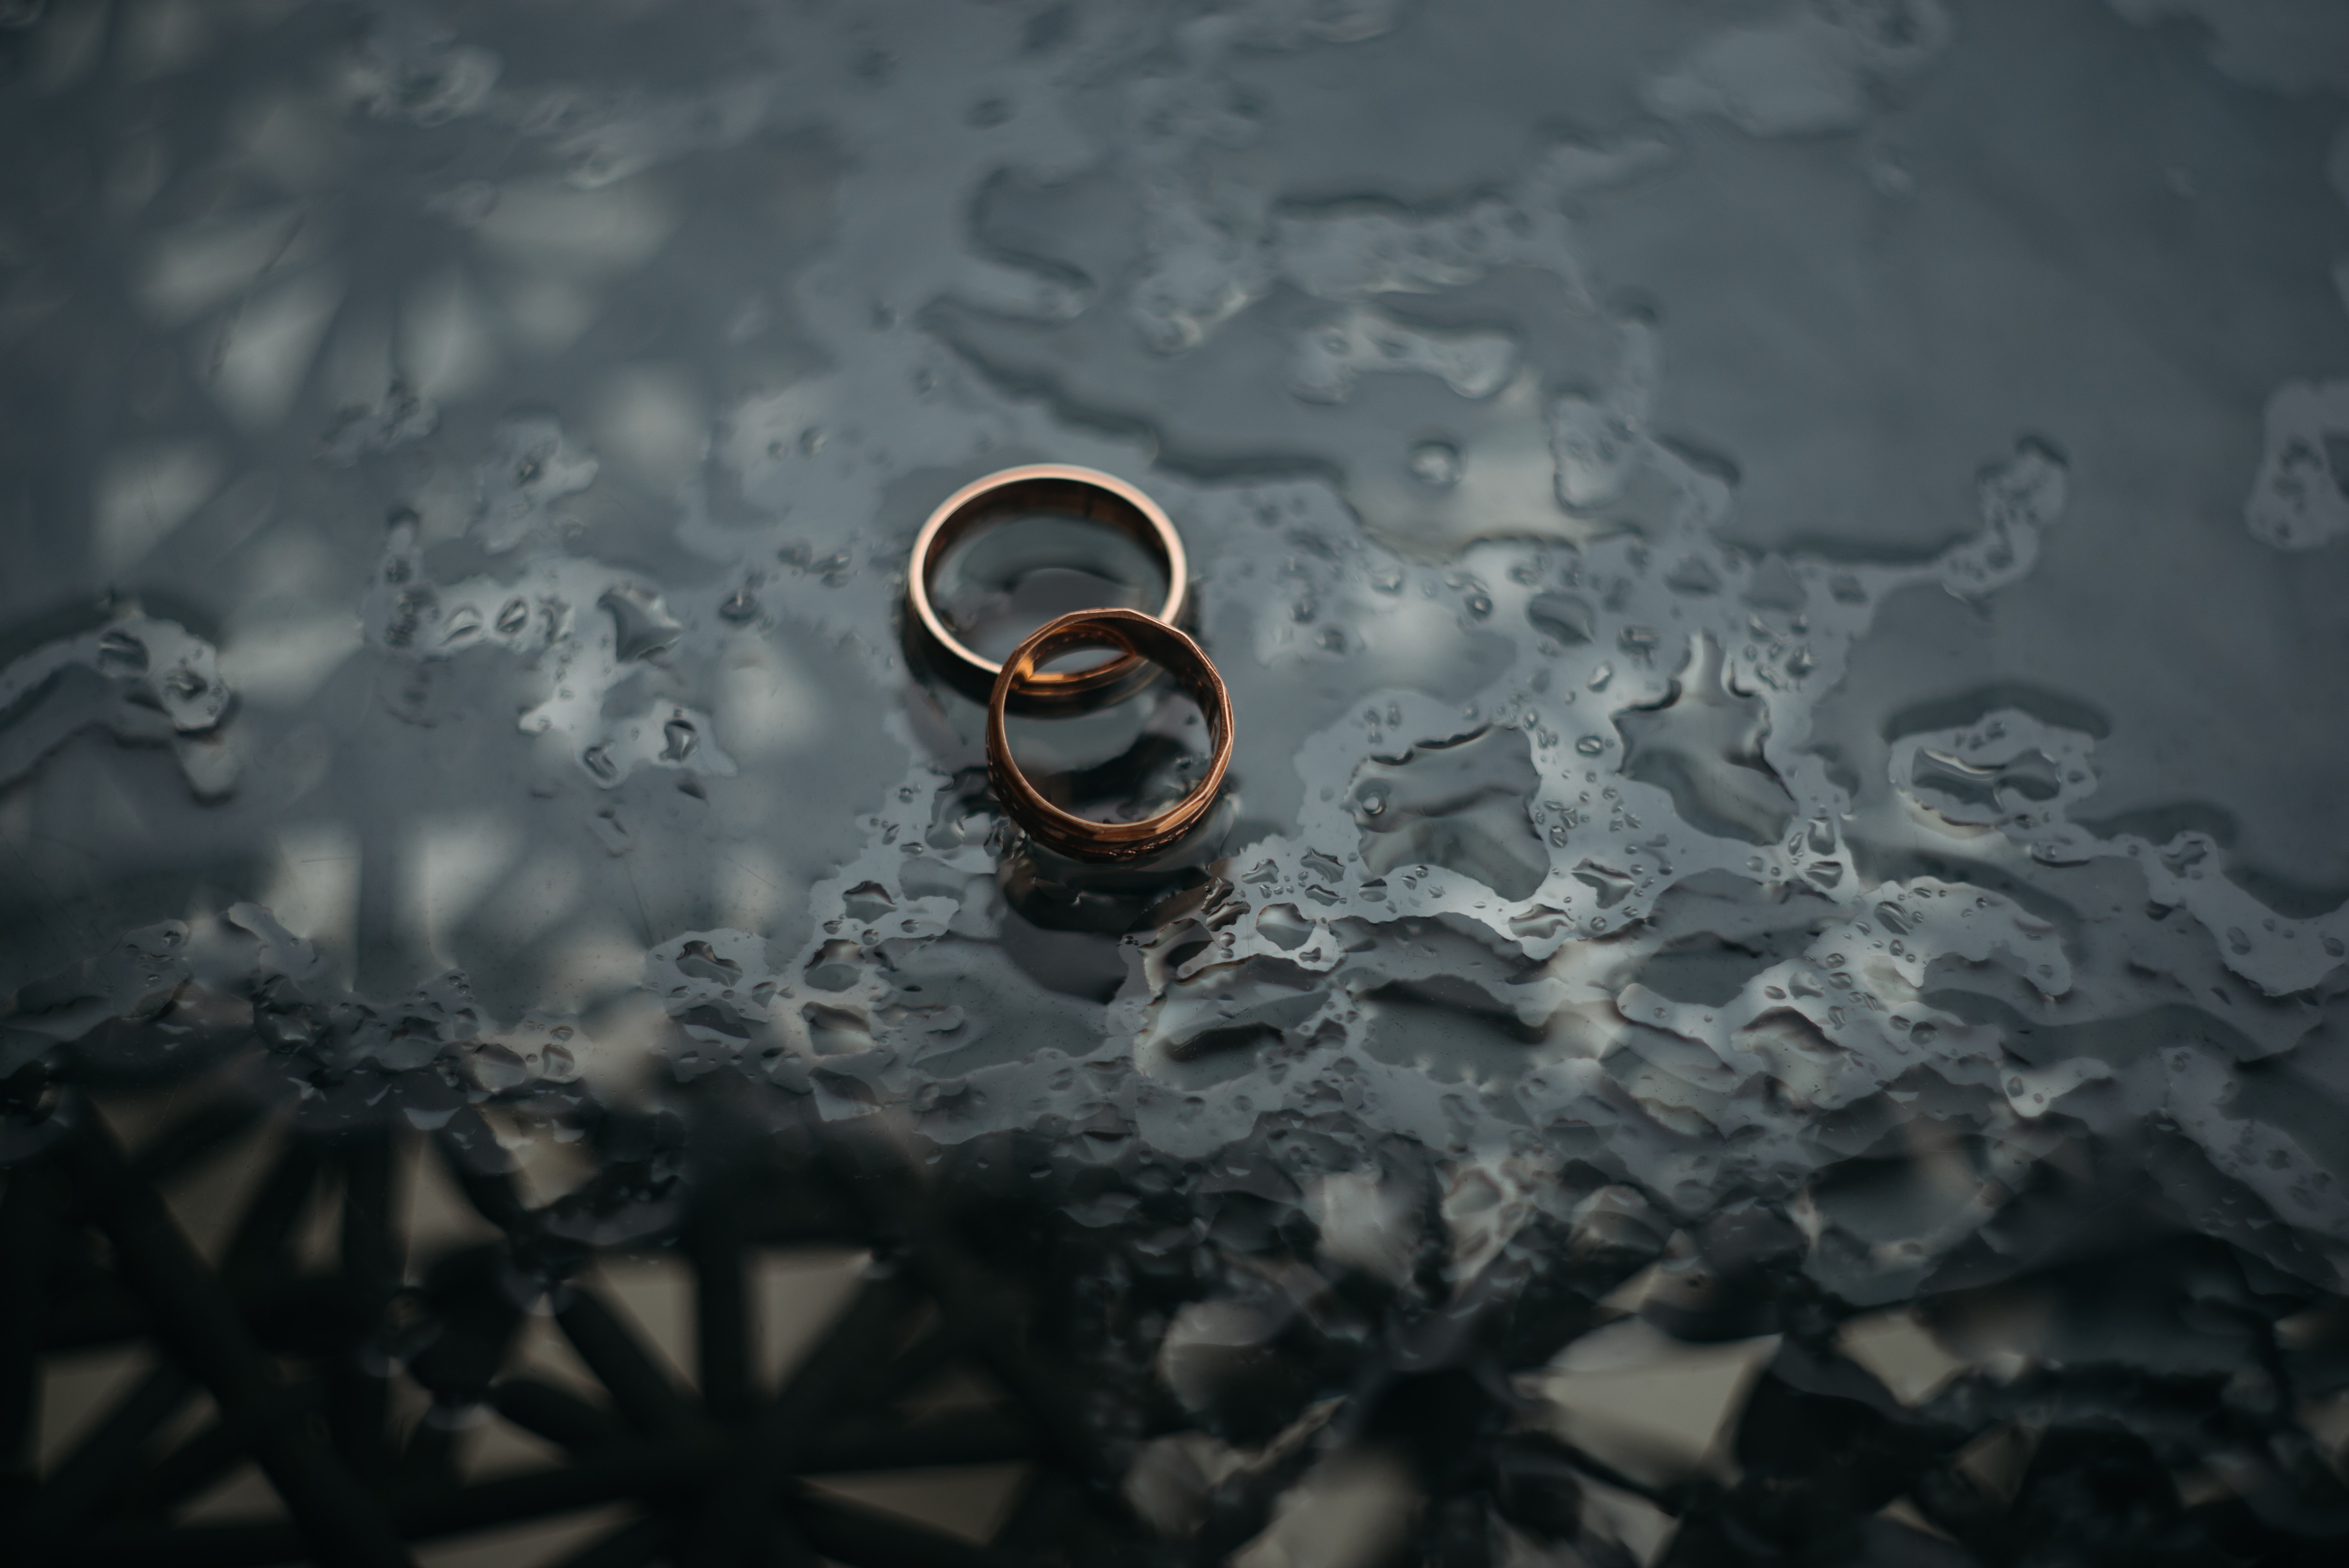 Two wedding rings on dark, wet surface; image by Zoriana Stakhniv, via Unsplash.com.